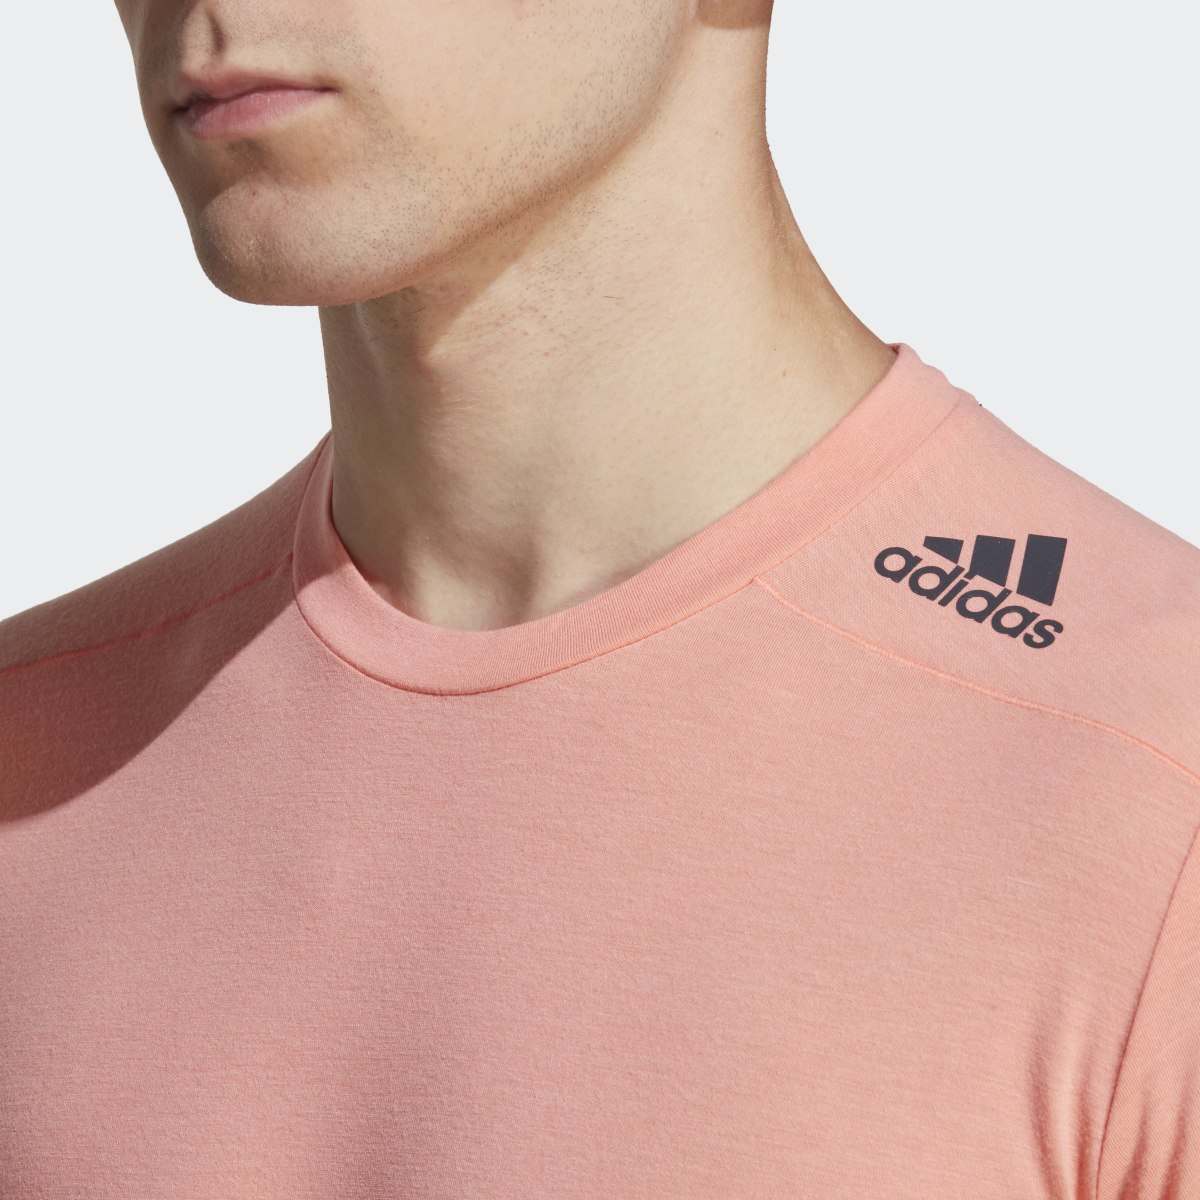 Adidas T-shirt Designed for Training. 8